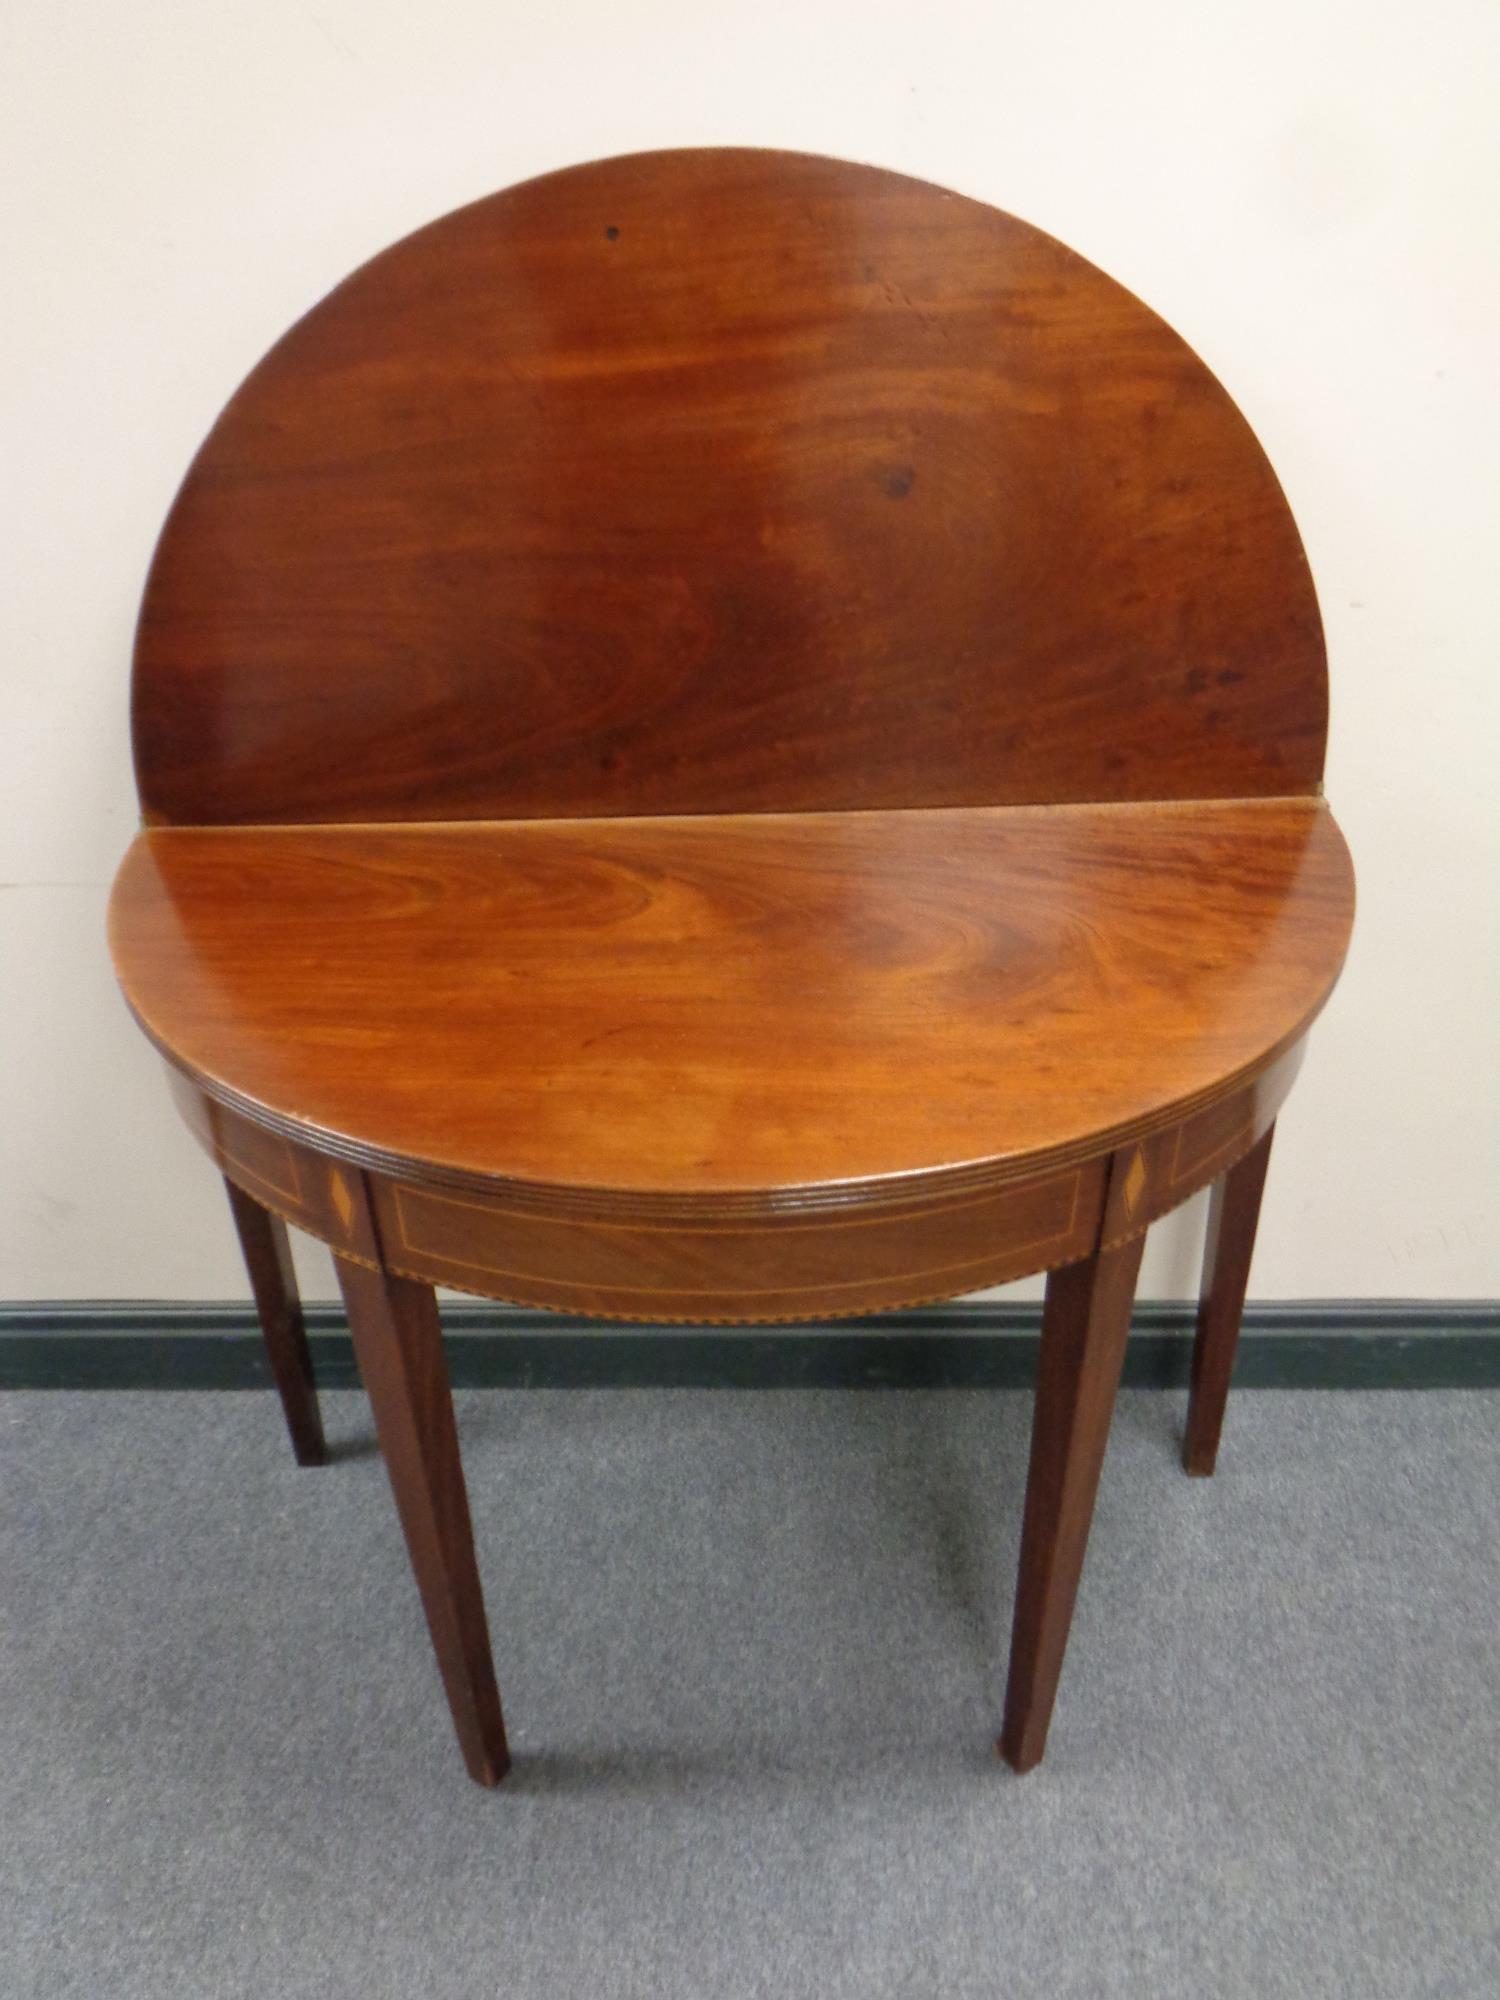 A 19th century inlaid mahogany demi lune turnover top tea table